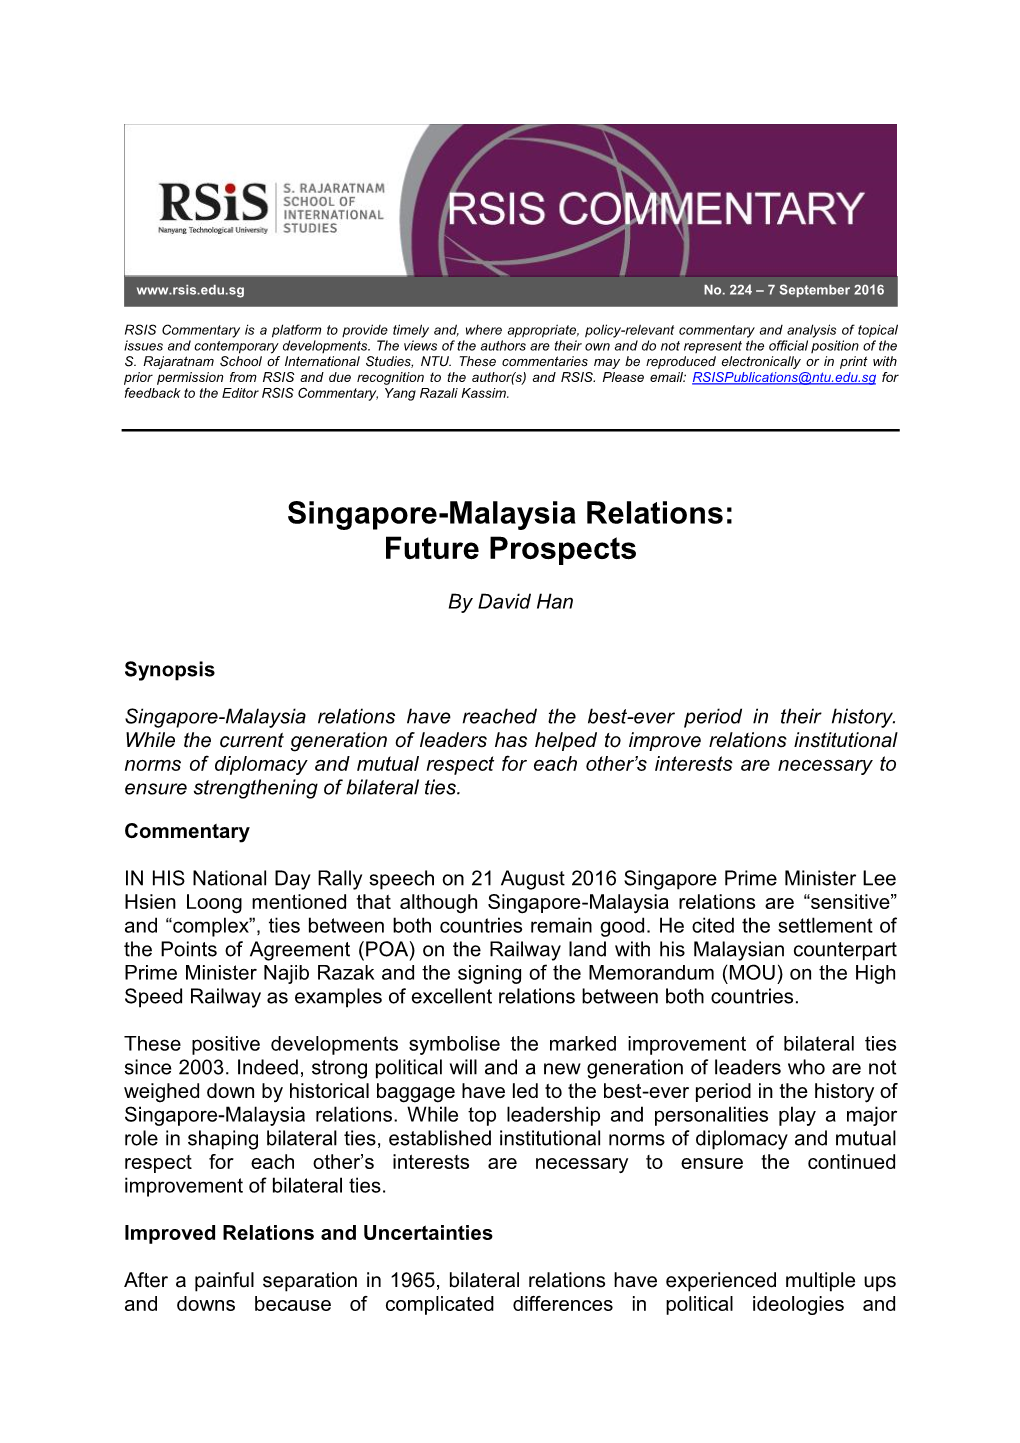 Singapore-Malaysia Relations: Future Prospects